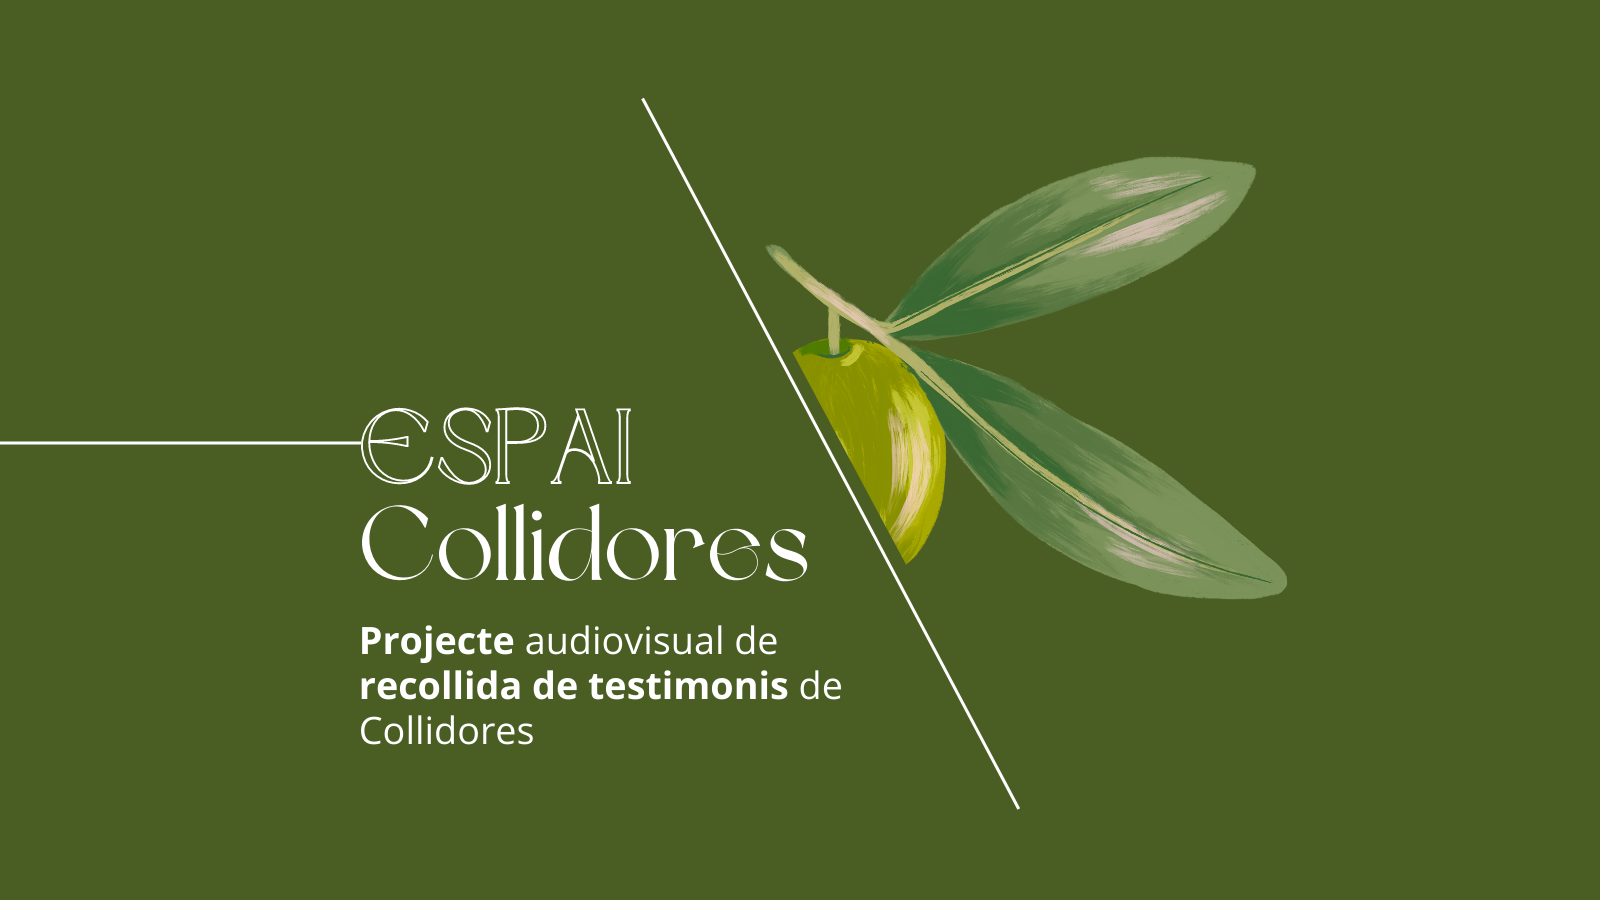 Visit the new 'Espai Collidores', at the Centre Serra de Tramuntana